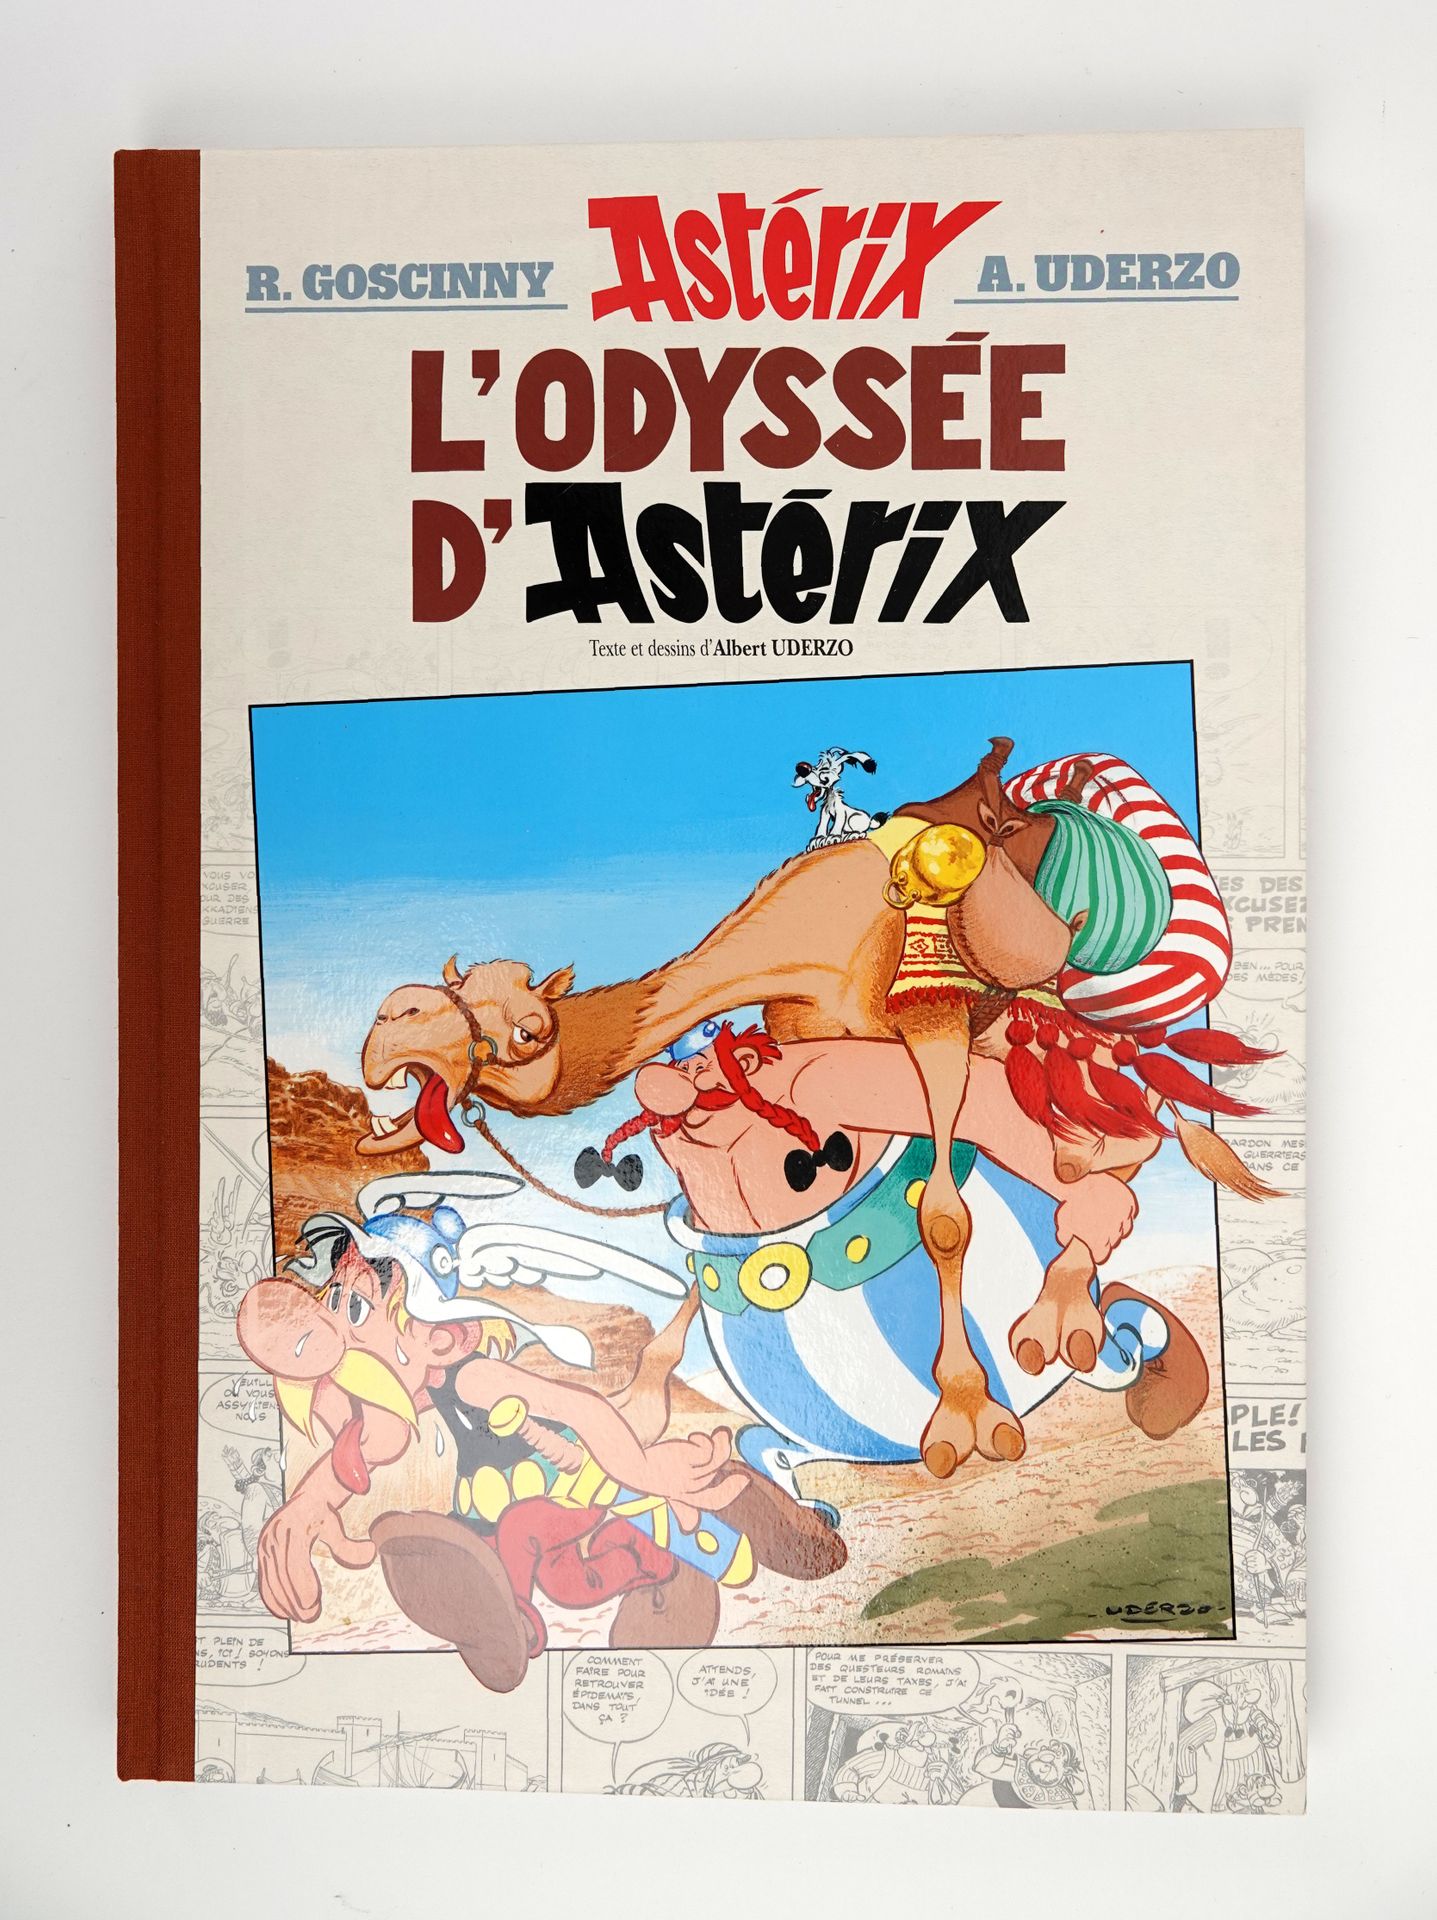 Null UDERZO
Astérix
Edición limitada de 4800 ejemplares del álbum L'odyssée d'As&hellip;